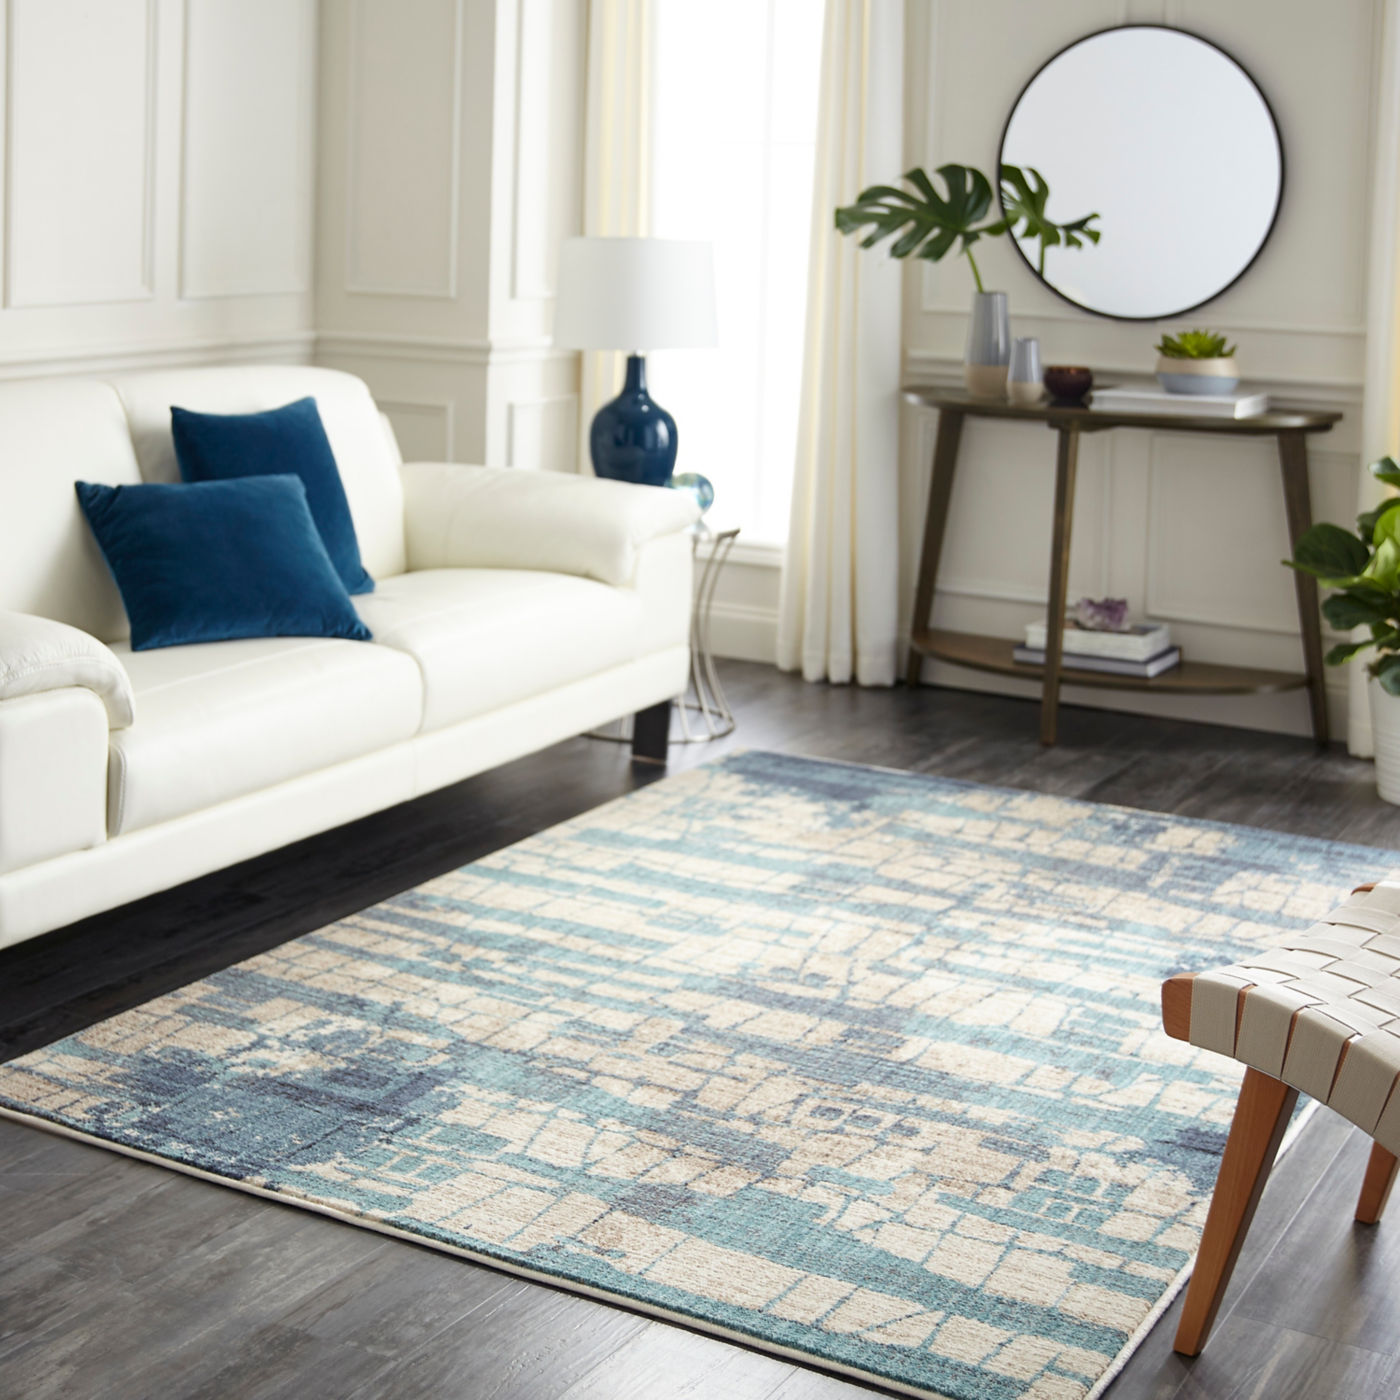 Area Rug in living room | Floor Dimensions